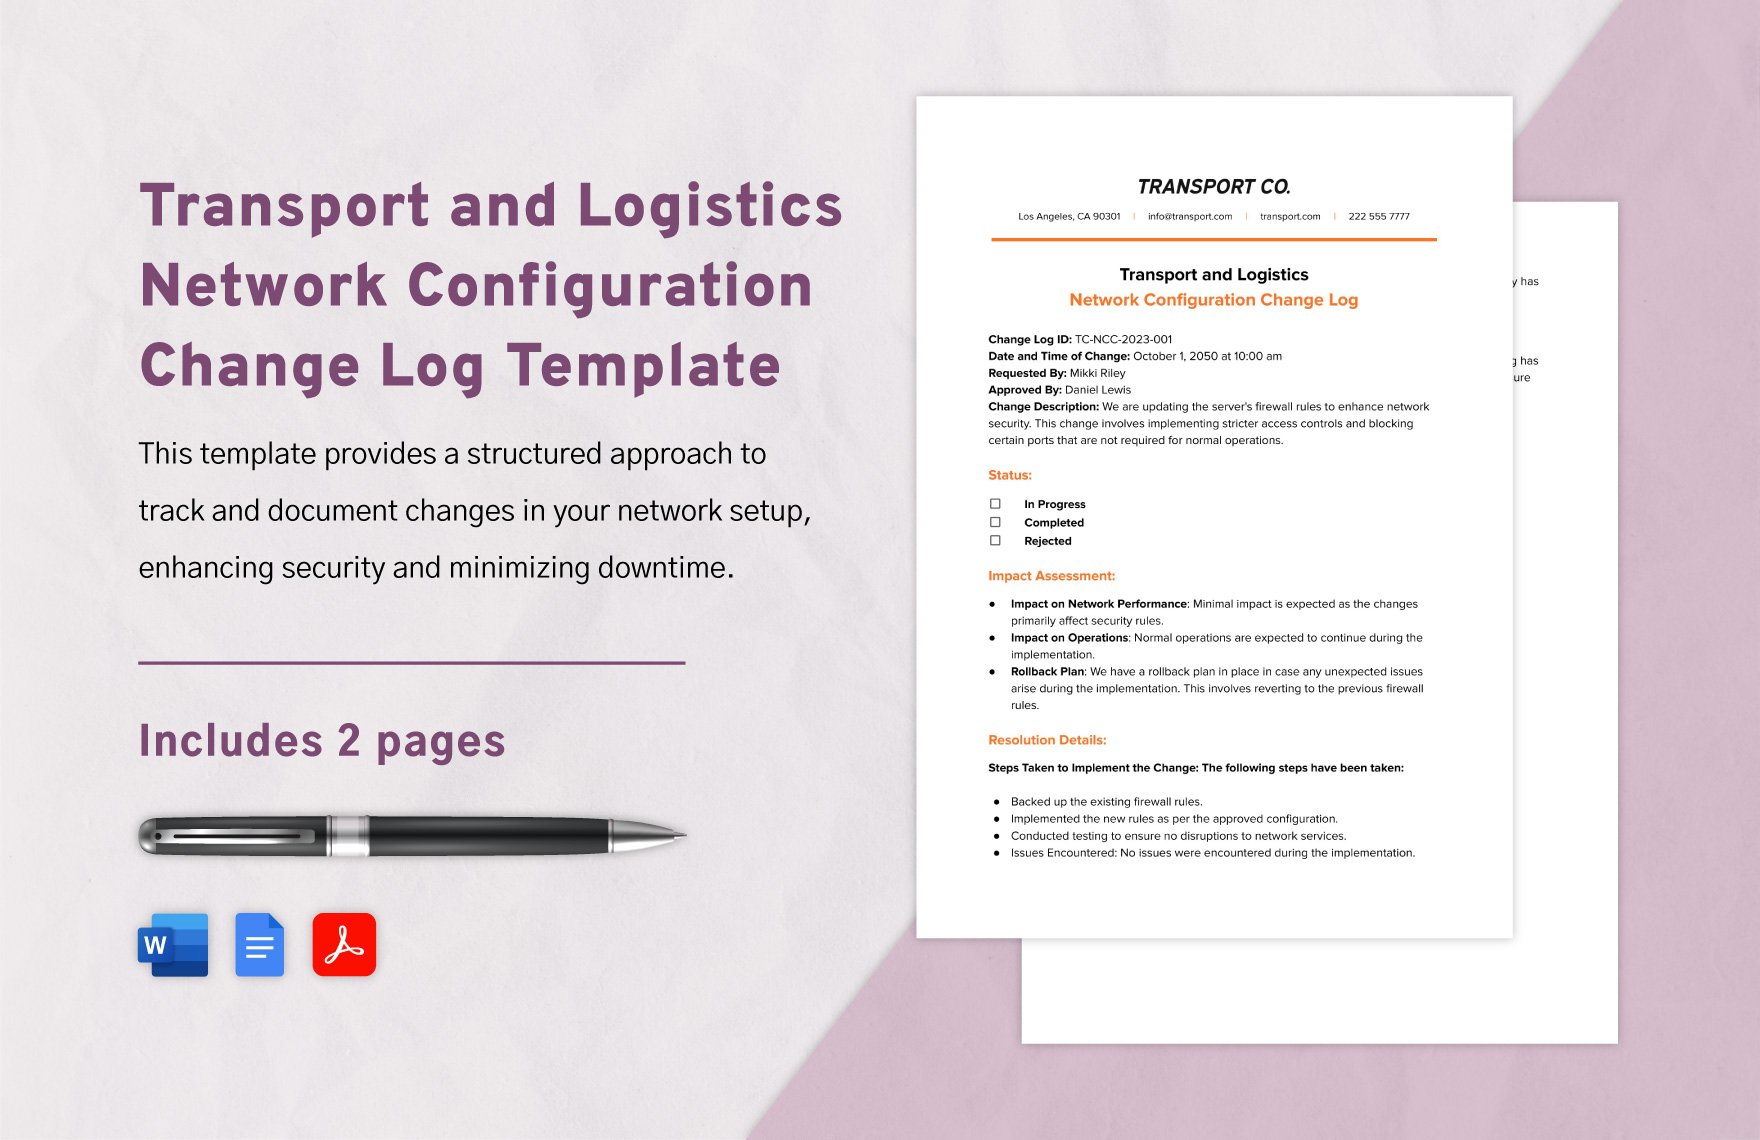 Transport and Logistics Network Configuration Change Log Template